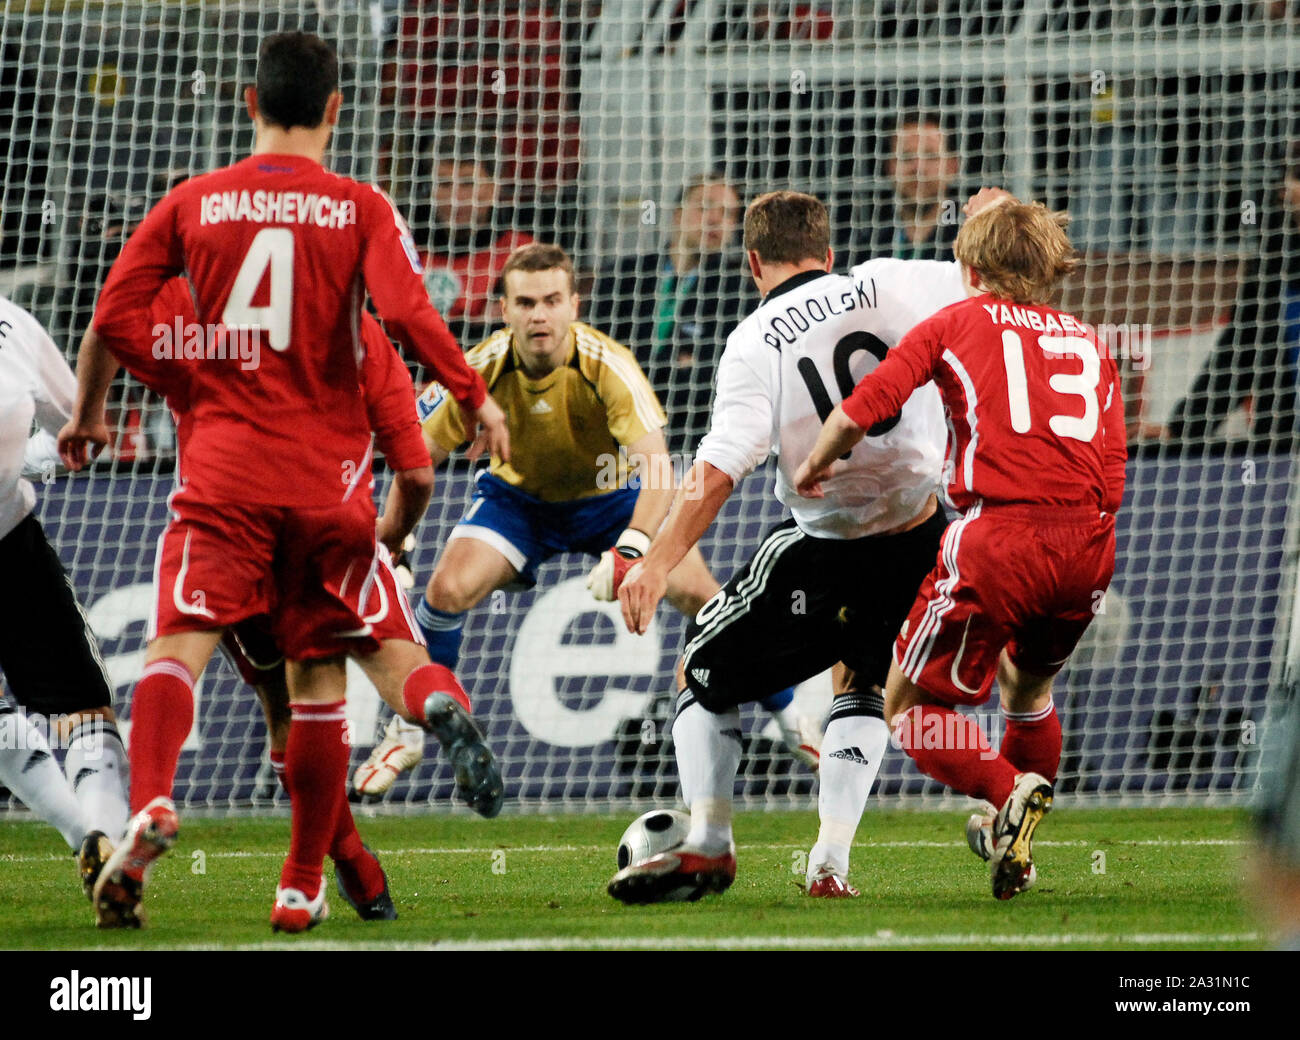 Arène Signal-Iduna Dortmund, Allemagne 11.10.2008, football : international qualificatif pour WC 2010 , Allemagne (GER, blanc) contre la Russie (RUS, rouge) 2:1, Lukas Podolski (GER) marque le 1:0 objectif (GER) Banque D'Images